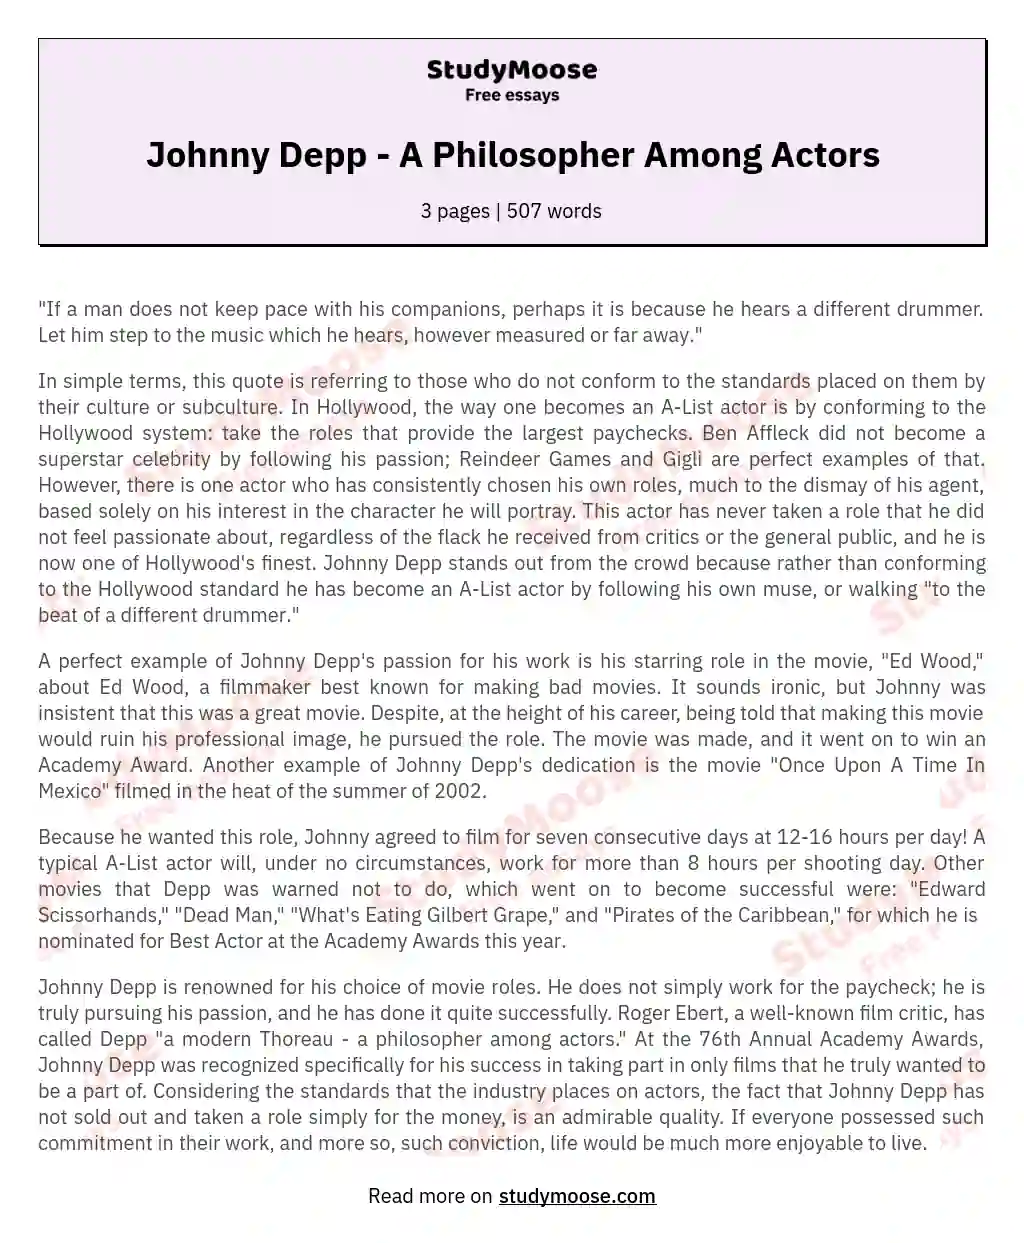 Johnny Depp - A Philosopher Among Actors